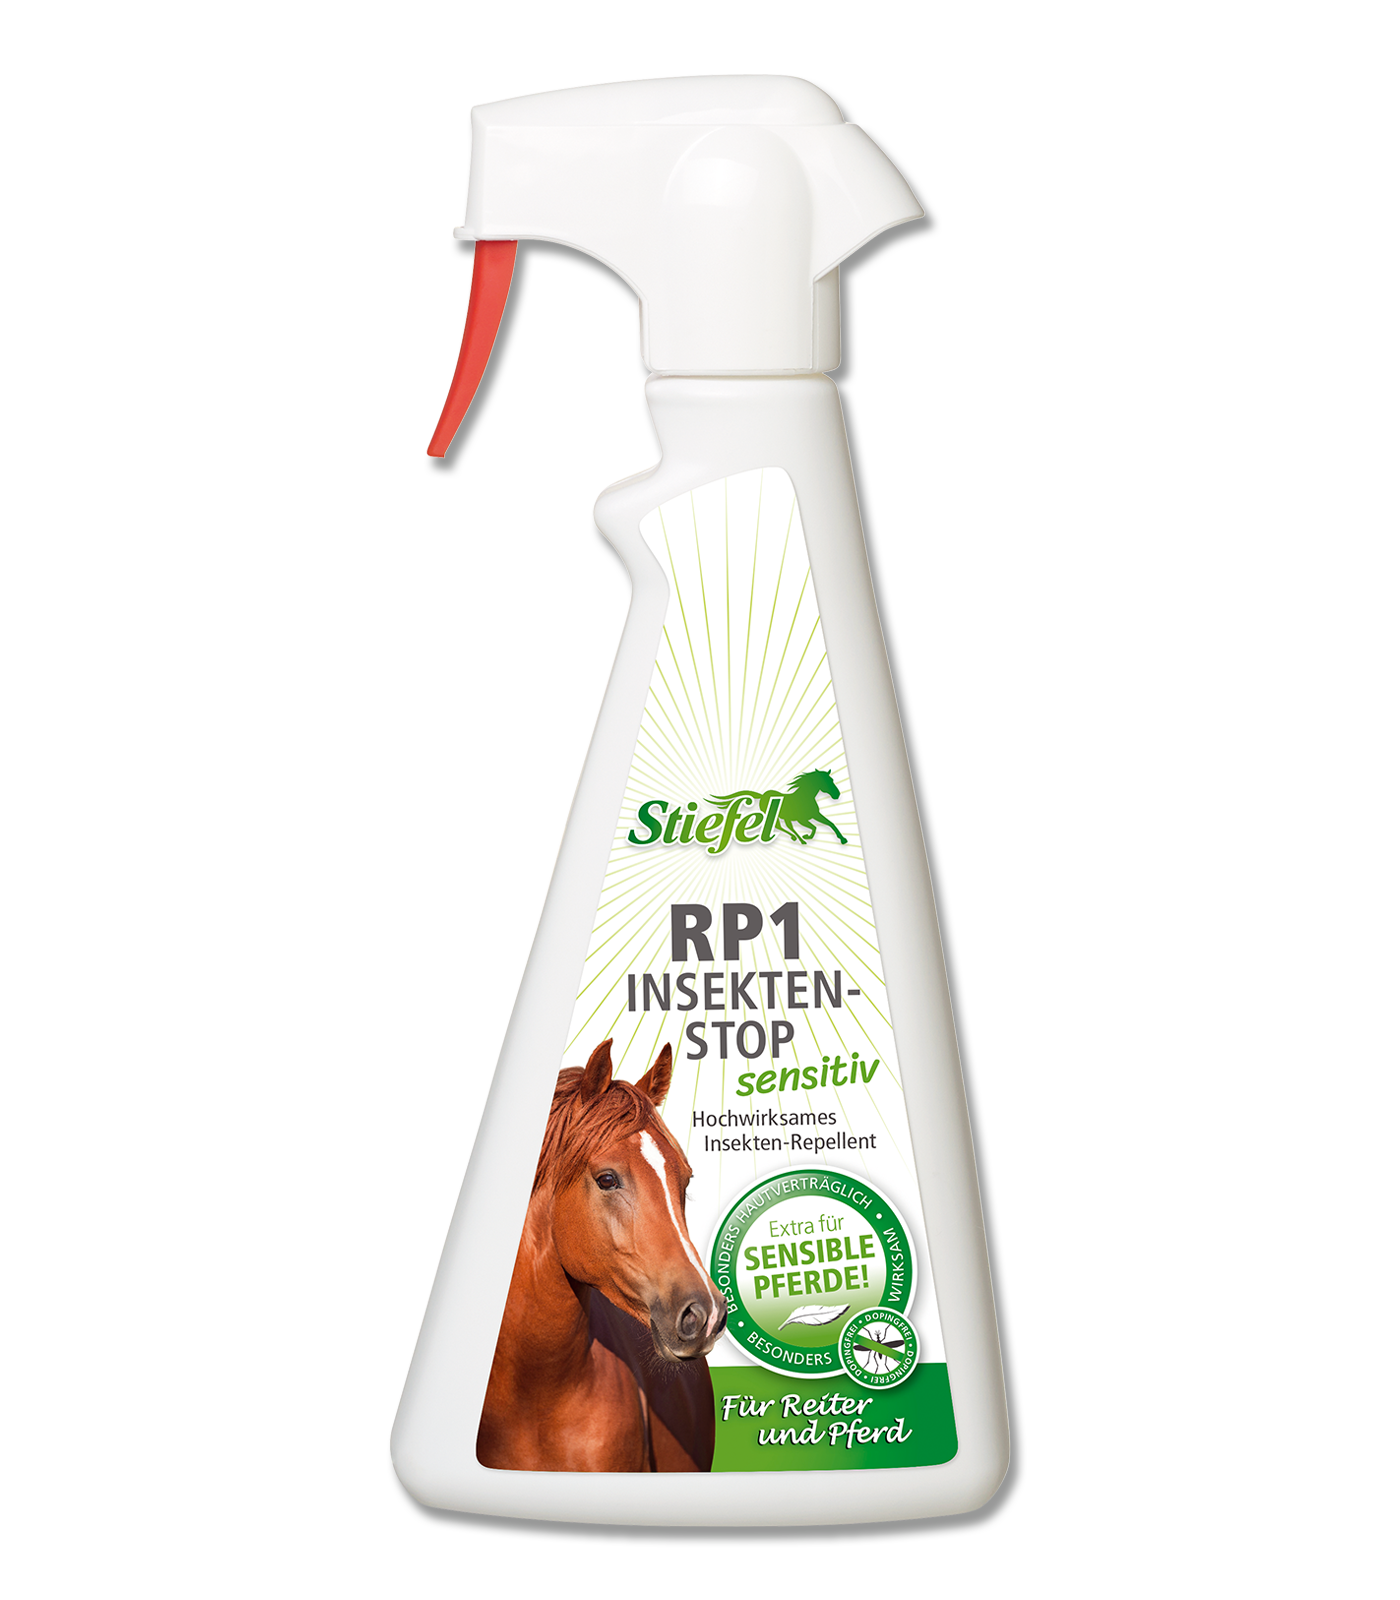 Stiefel RP1 INSEKTEN-STOP Sensitiv, 500 ml